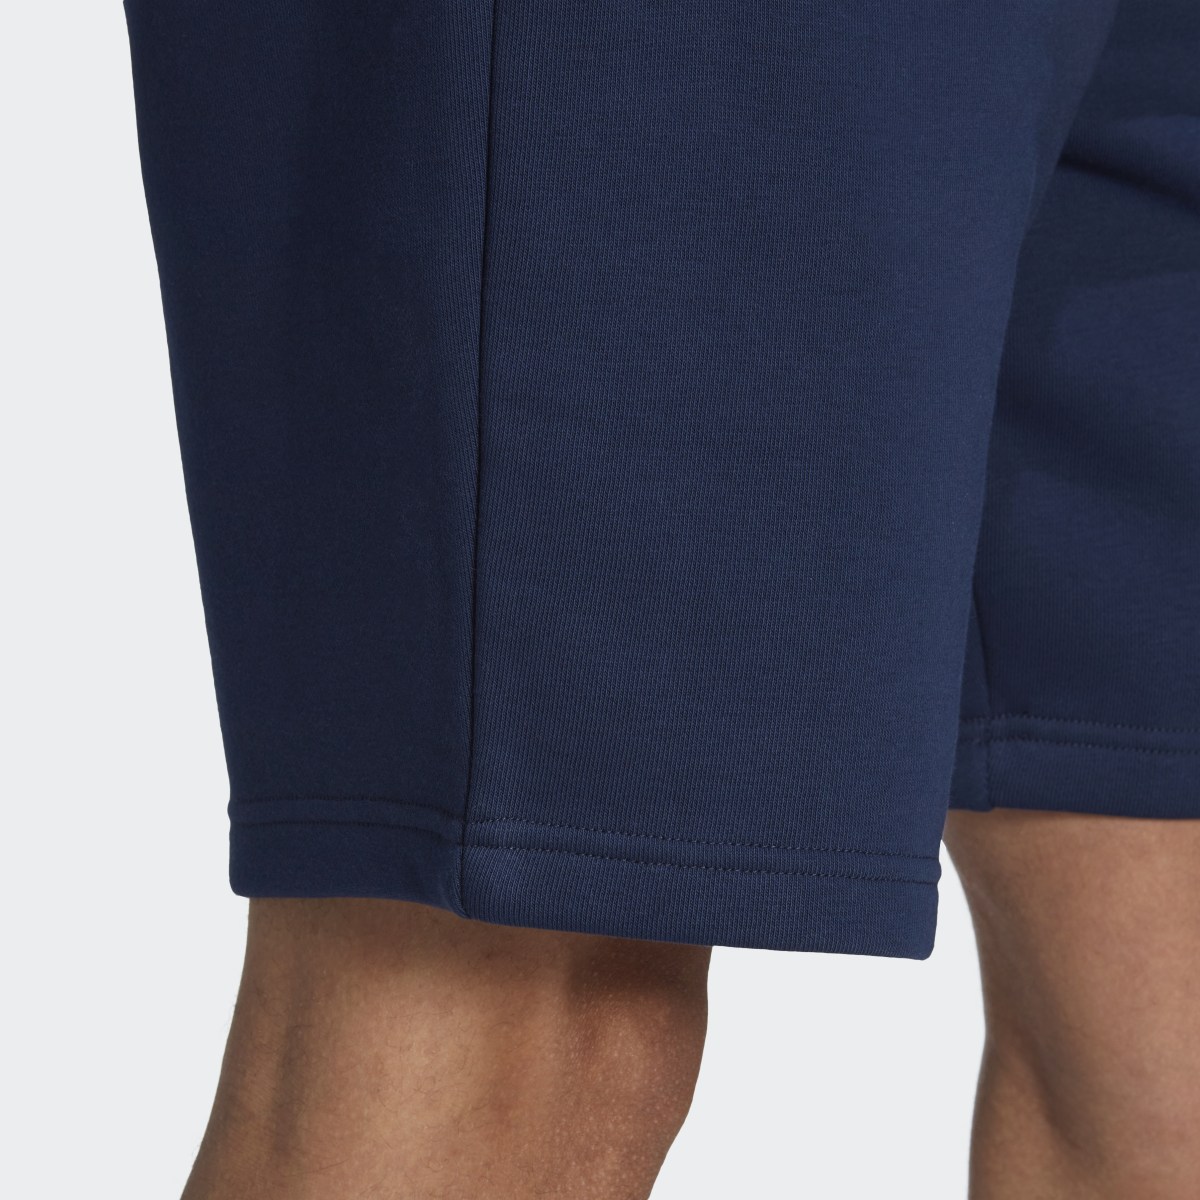 Adidas Trefoil Essentials Shorts. 6